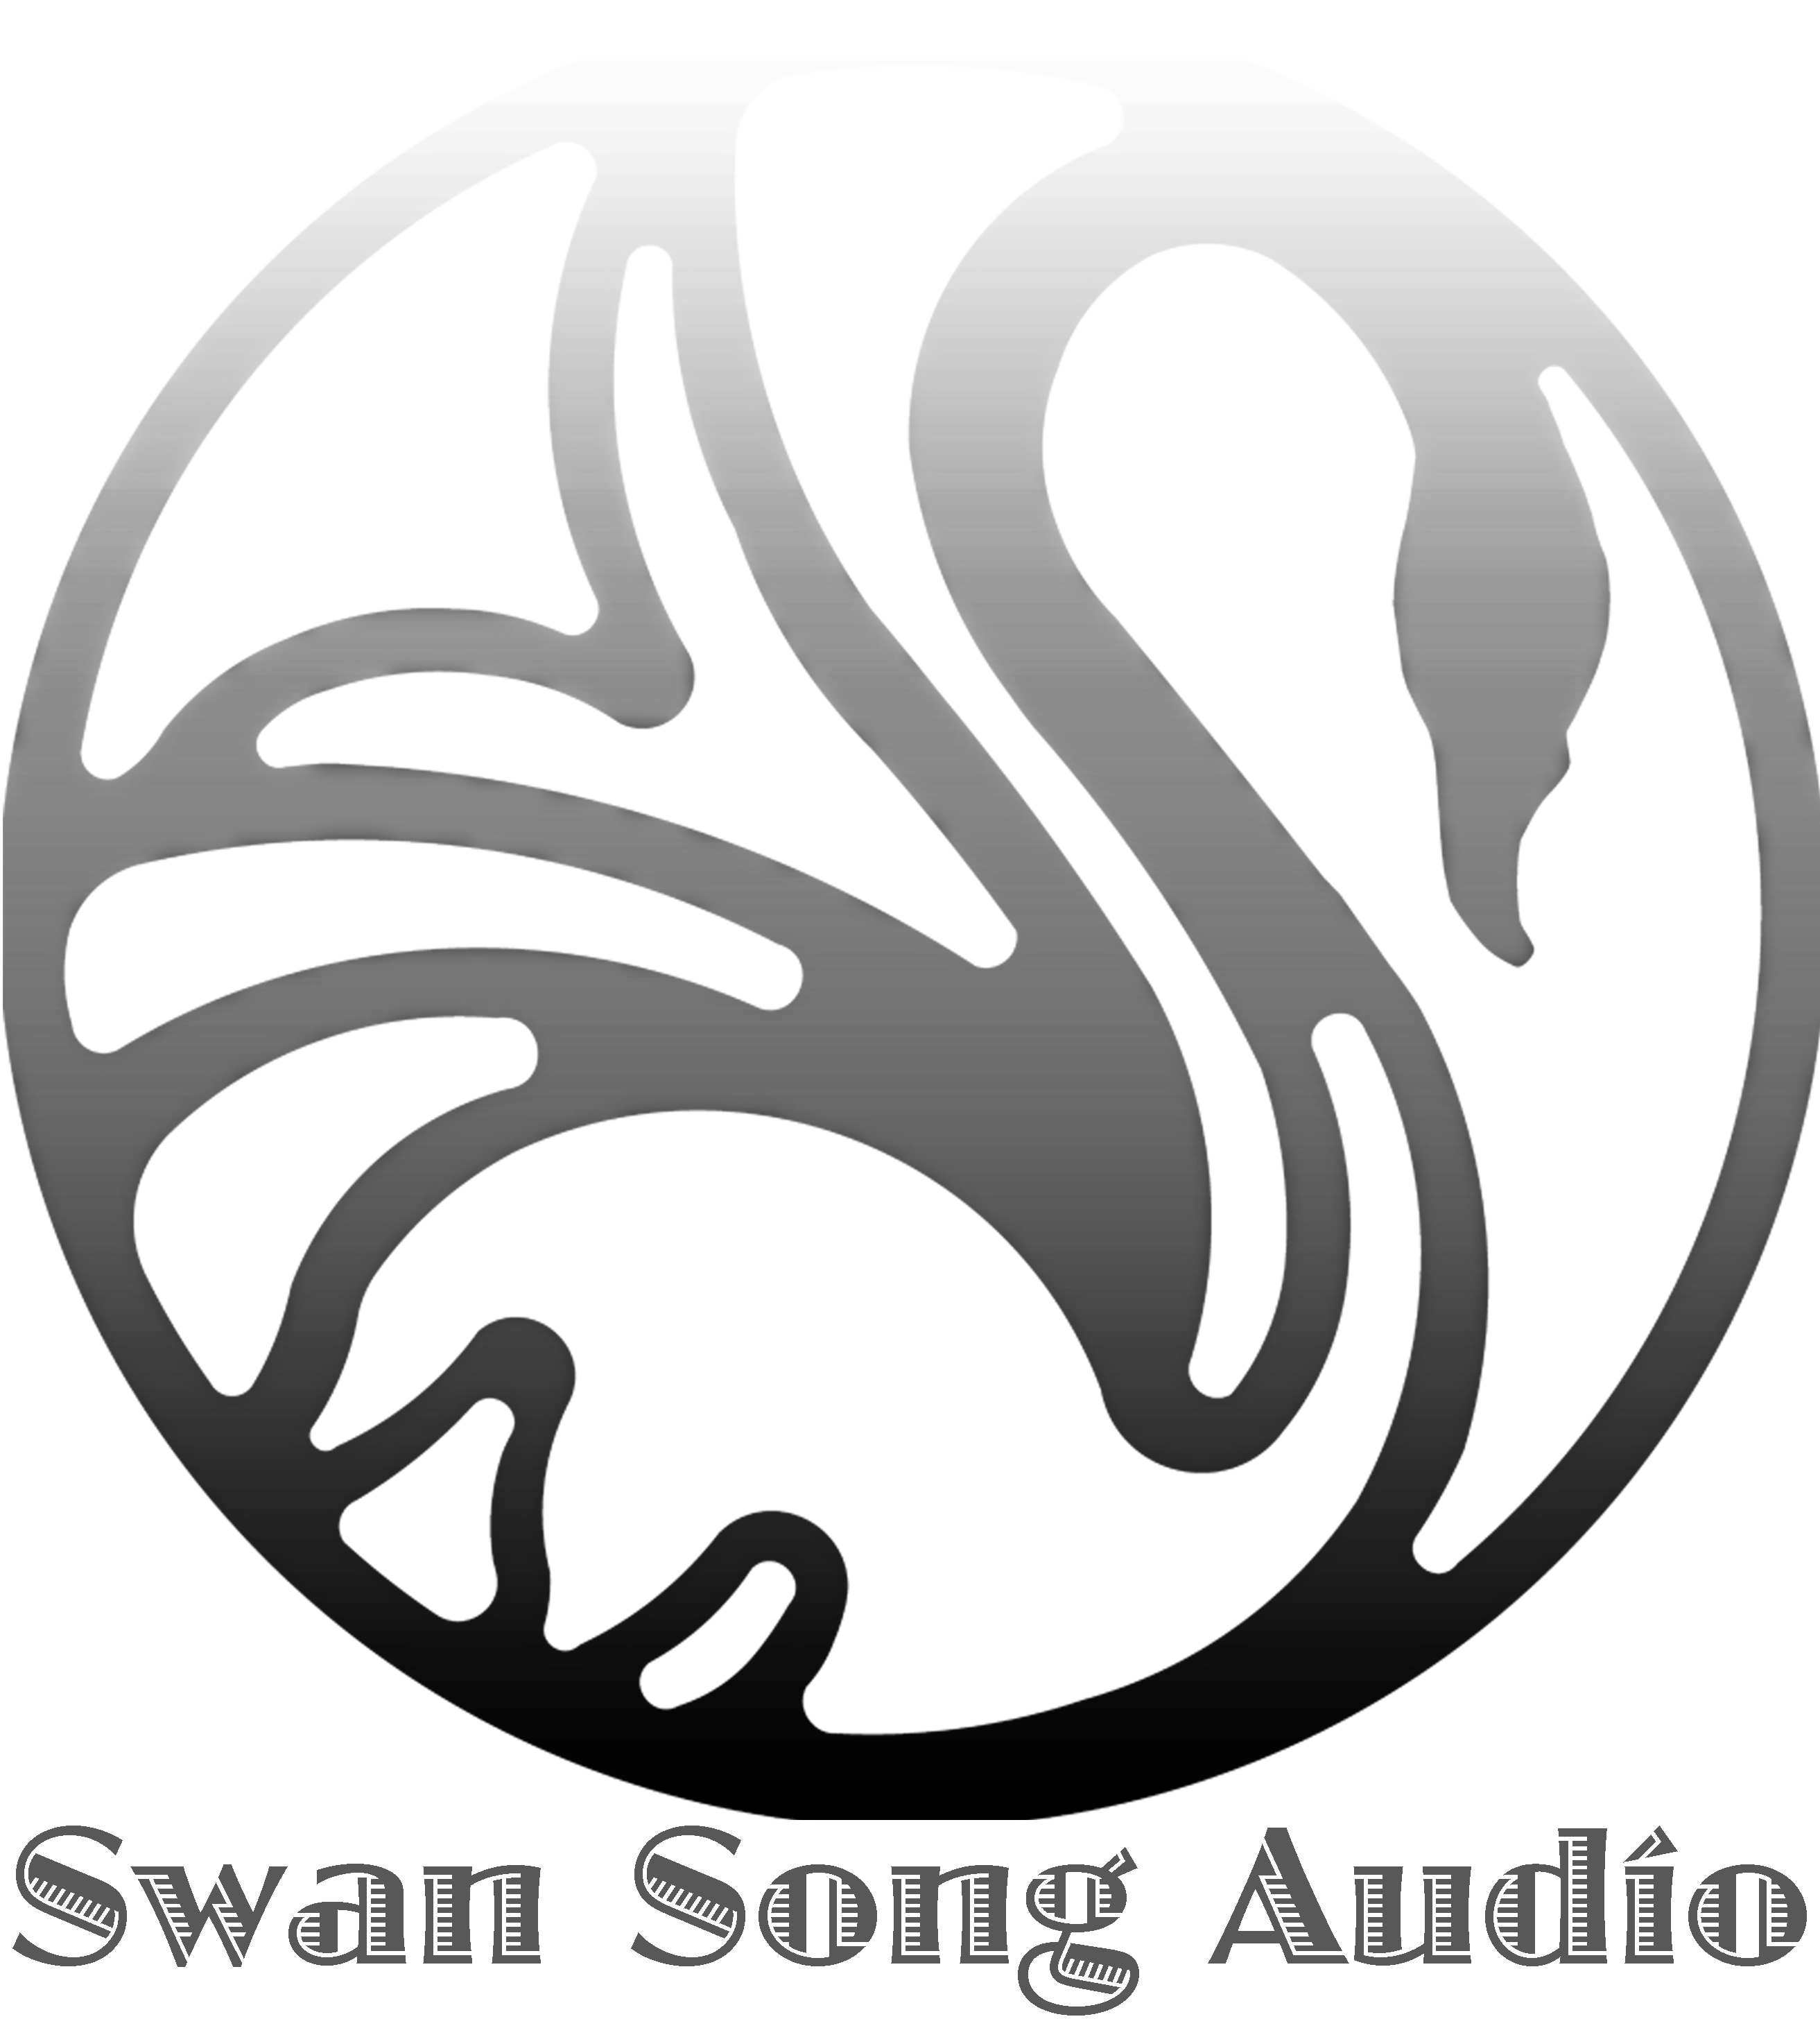 swan song audio